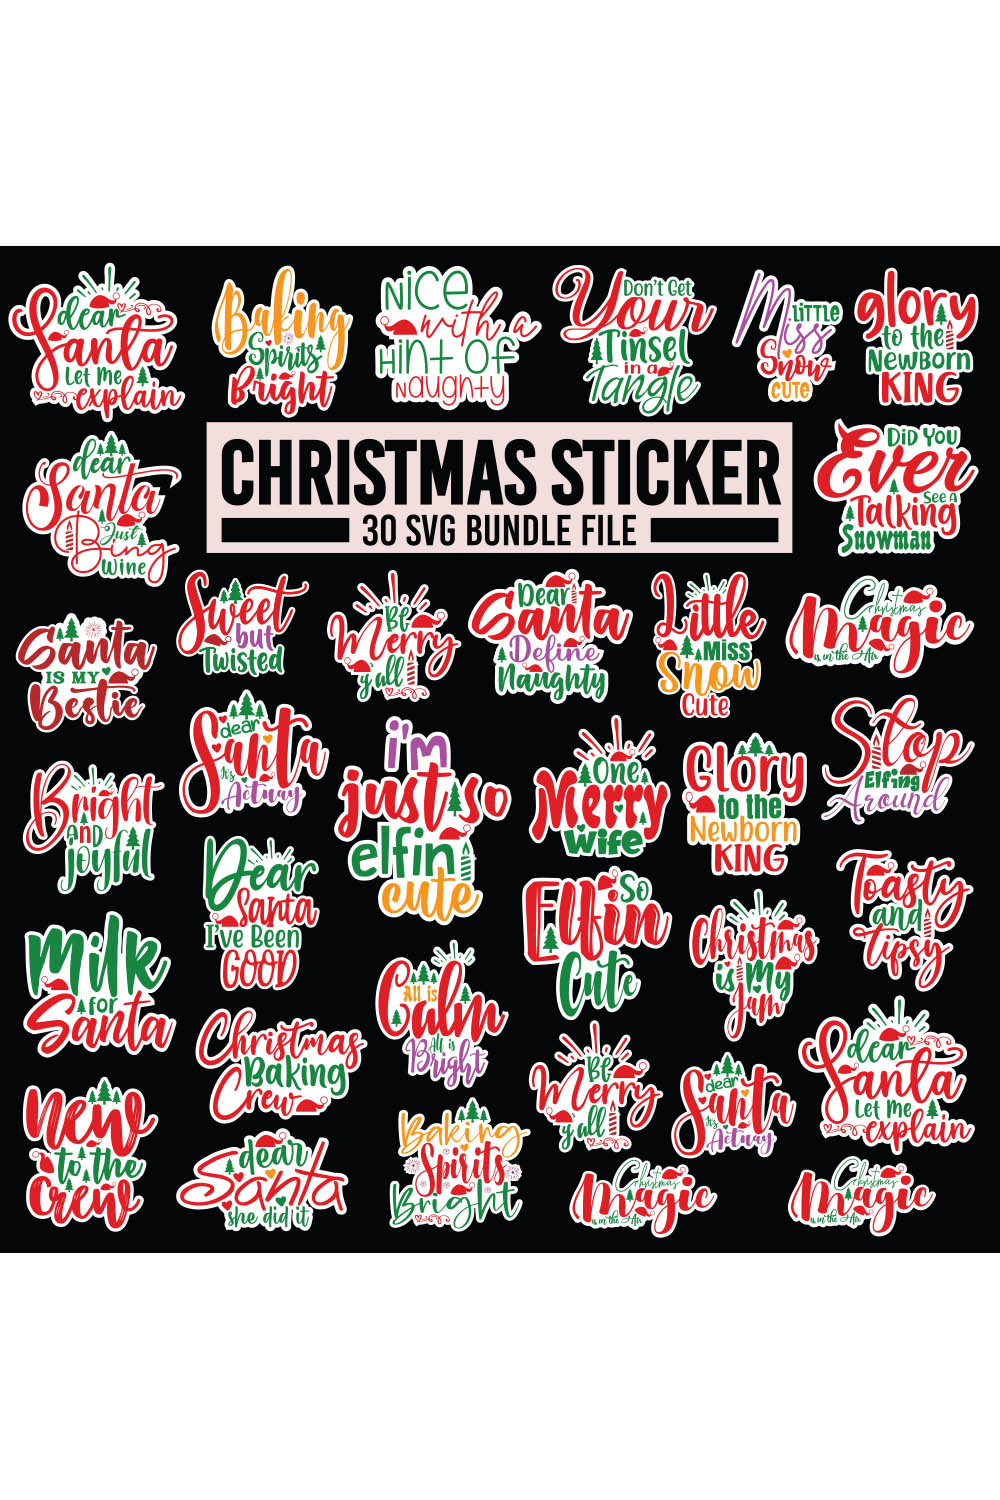 30 SVG sticker Christmas Bundle, Sticker SVG Bundle, Holiday SVG Bundle, Santa SVg , Christmas SVG Bundle pinterest preview image.